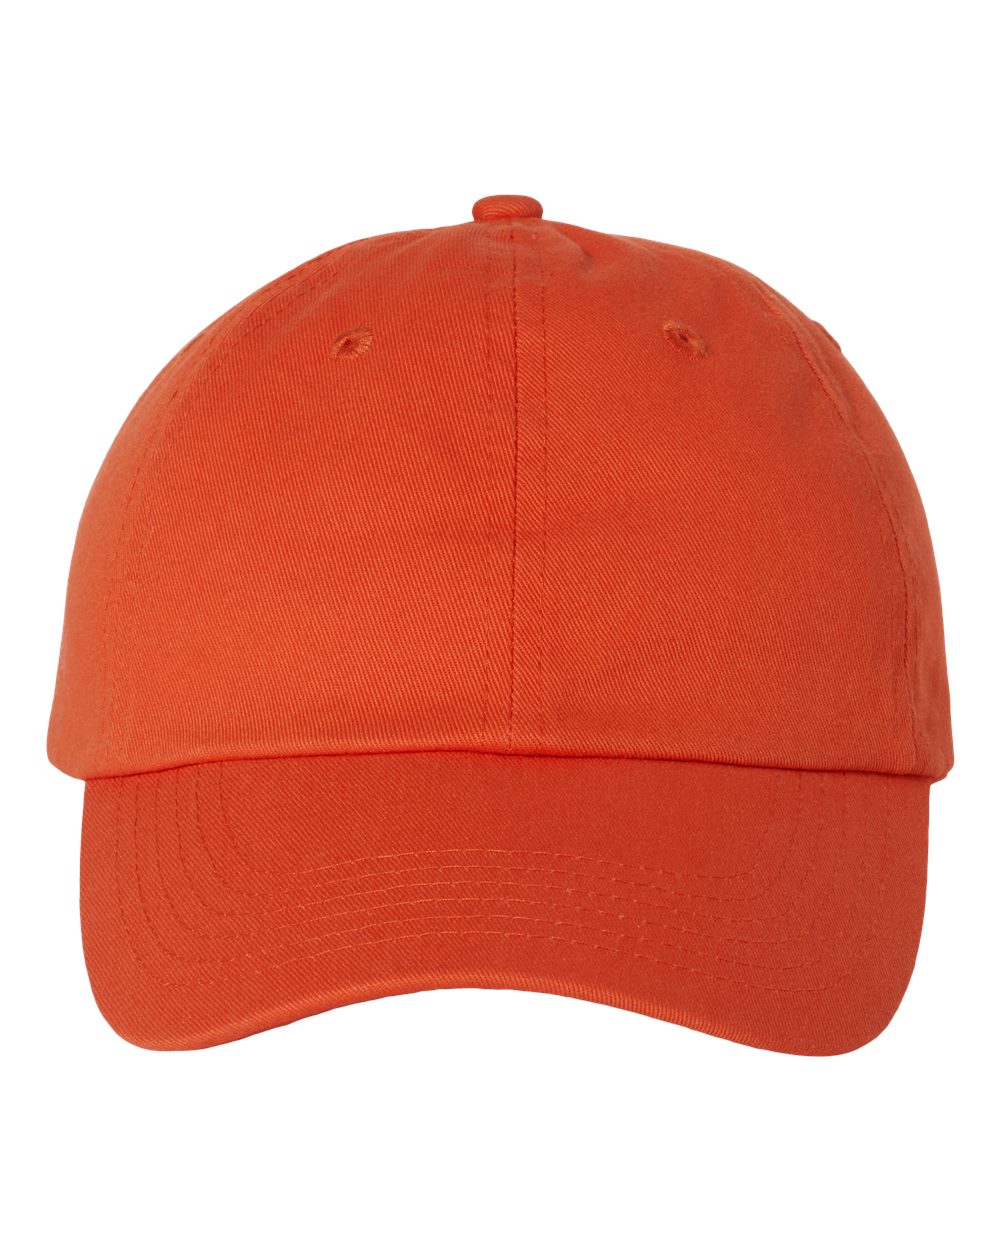 Youth Unisex Cap, Orange